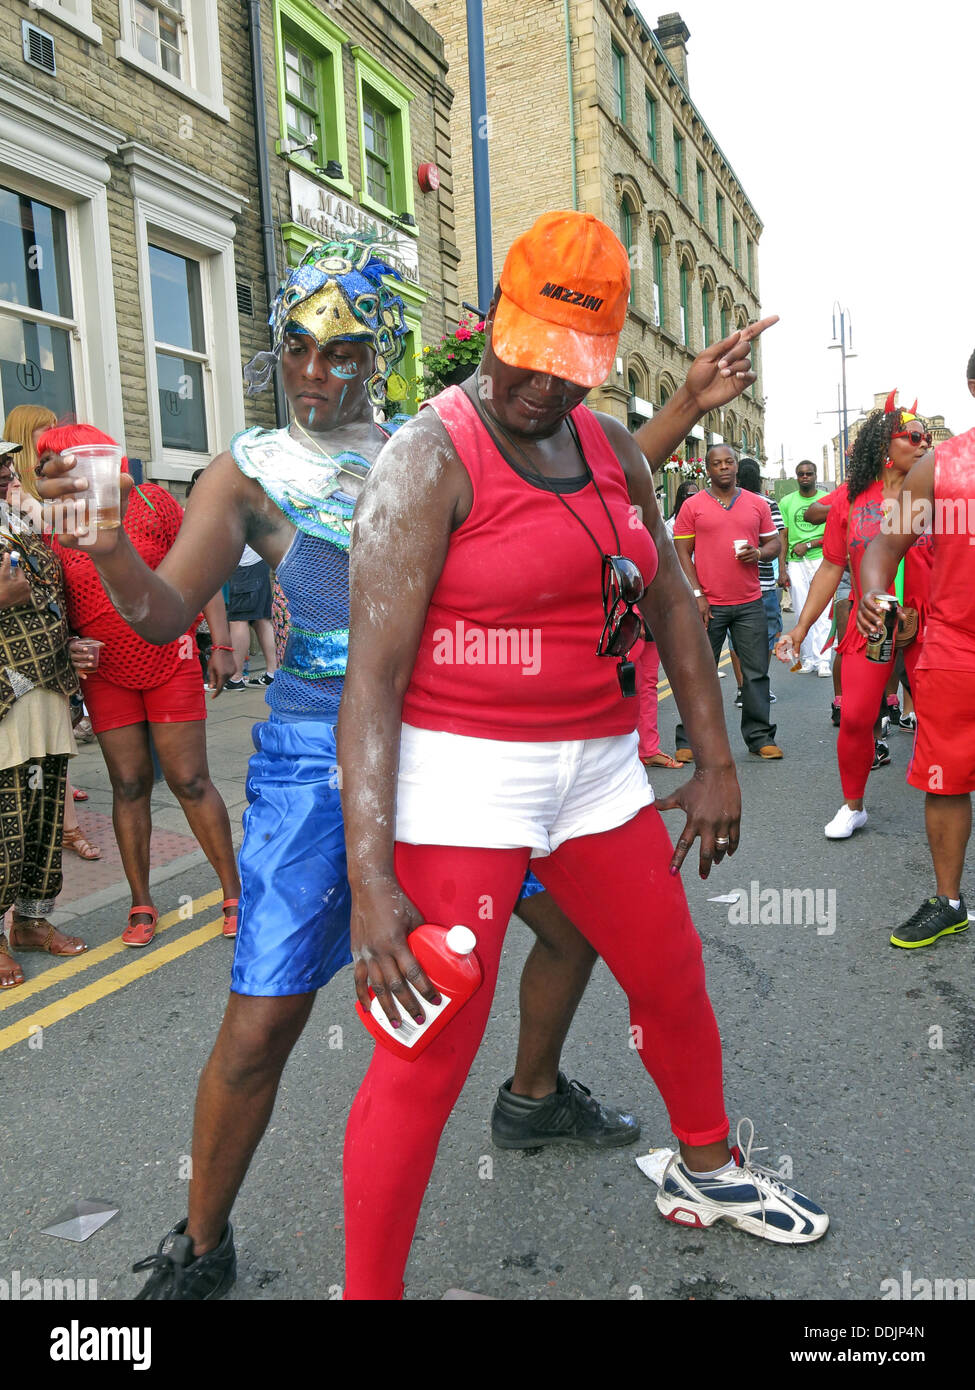 Kostümierte Tänzer mit Talkum aus Huddersfield Karneval 2013 Afrika Karibik Parade Straßenfest Stockfoto